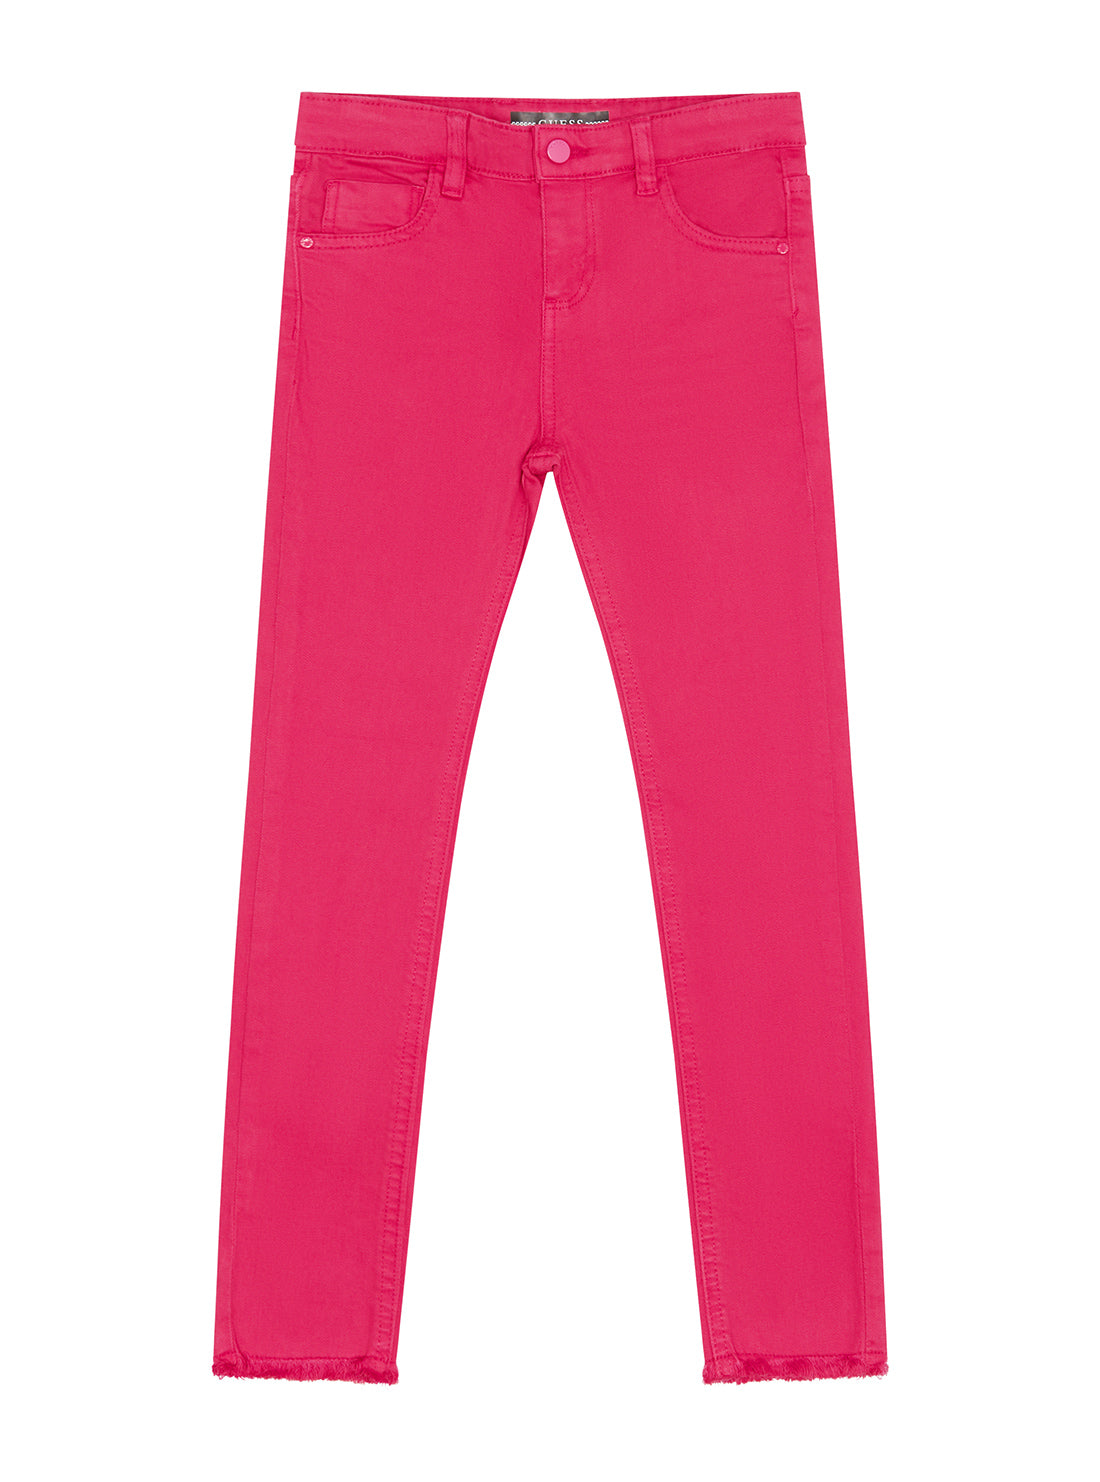 guess Denim Stretch Souvenir pink Girls Skinny Pant (2-7) front view